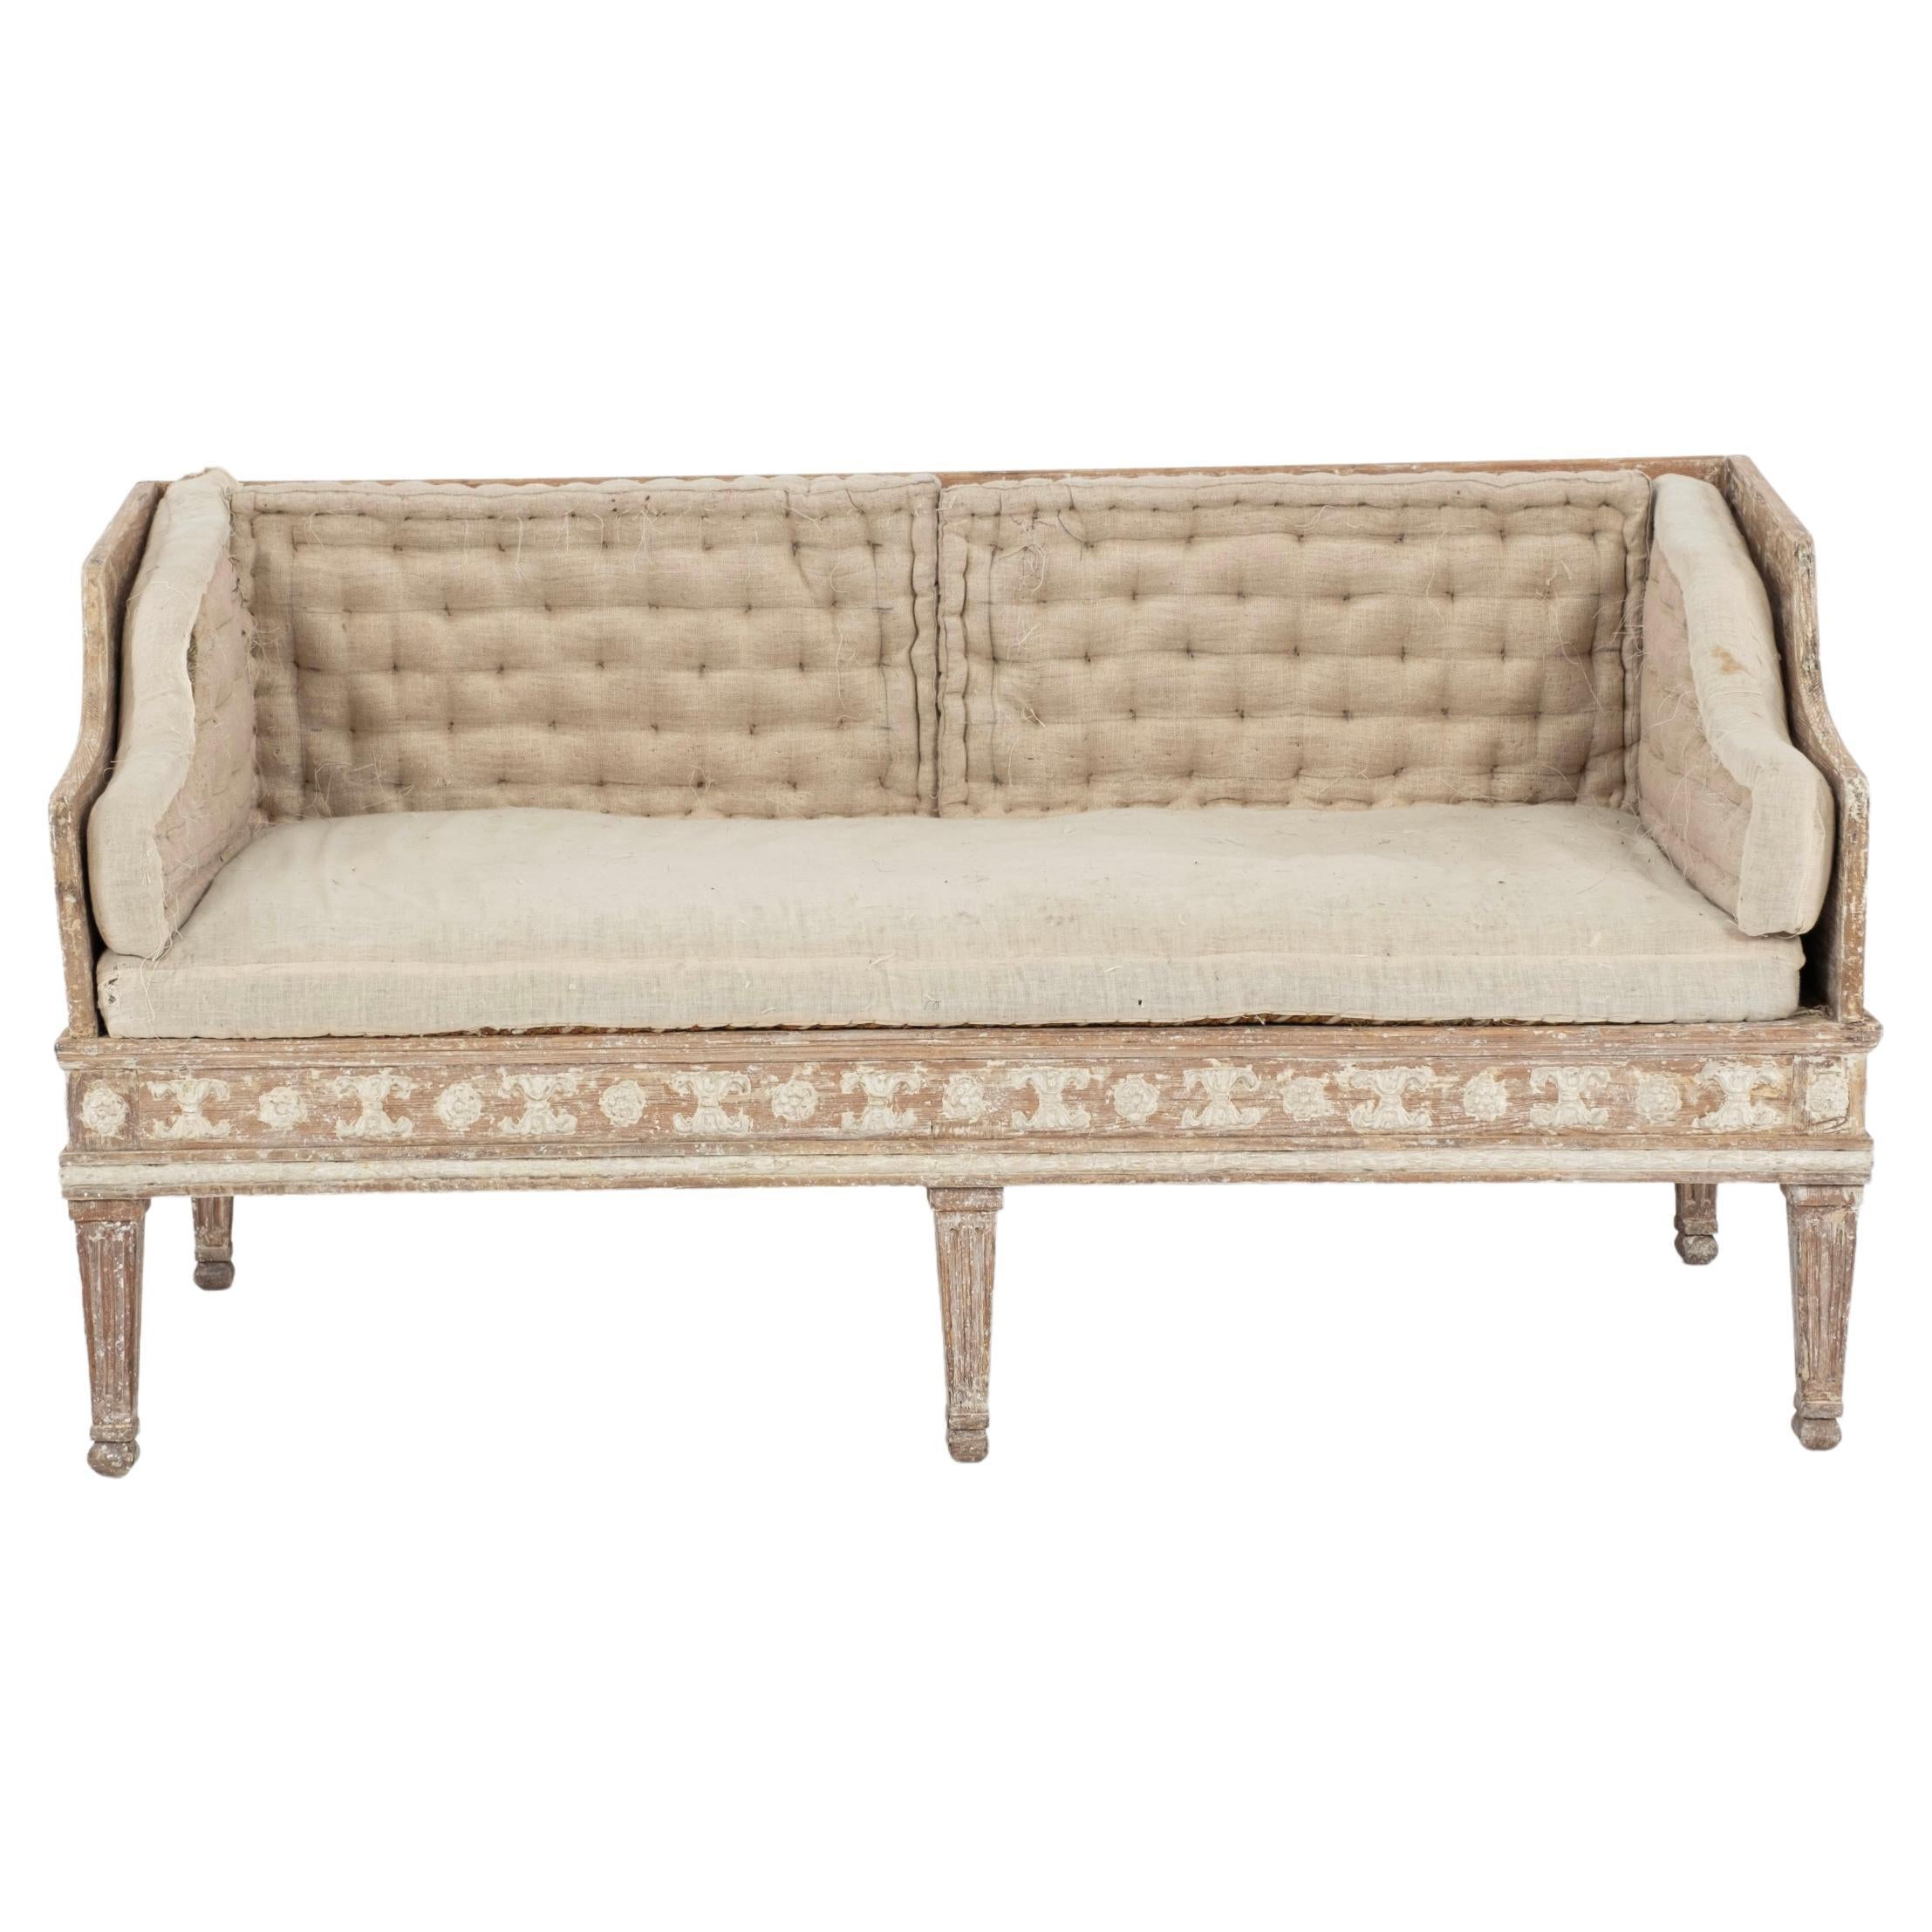 19th C. Gustavian Bench or Sofa